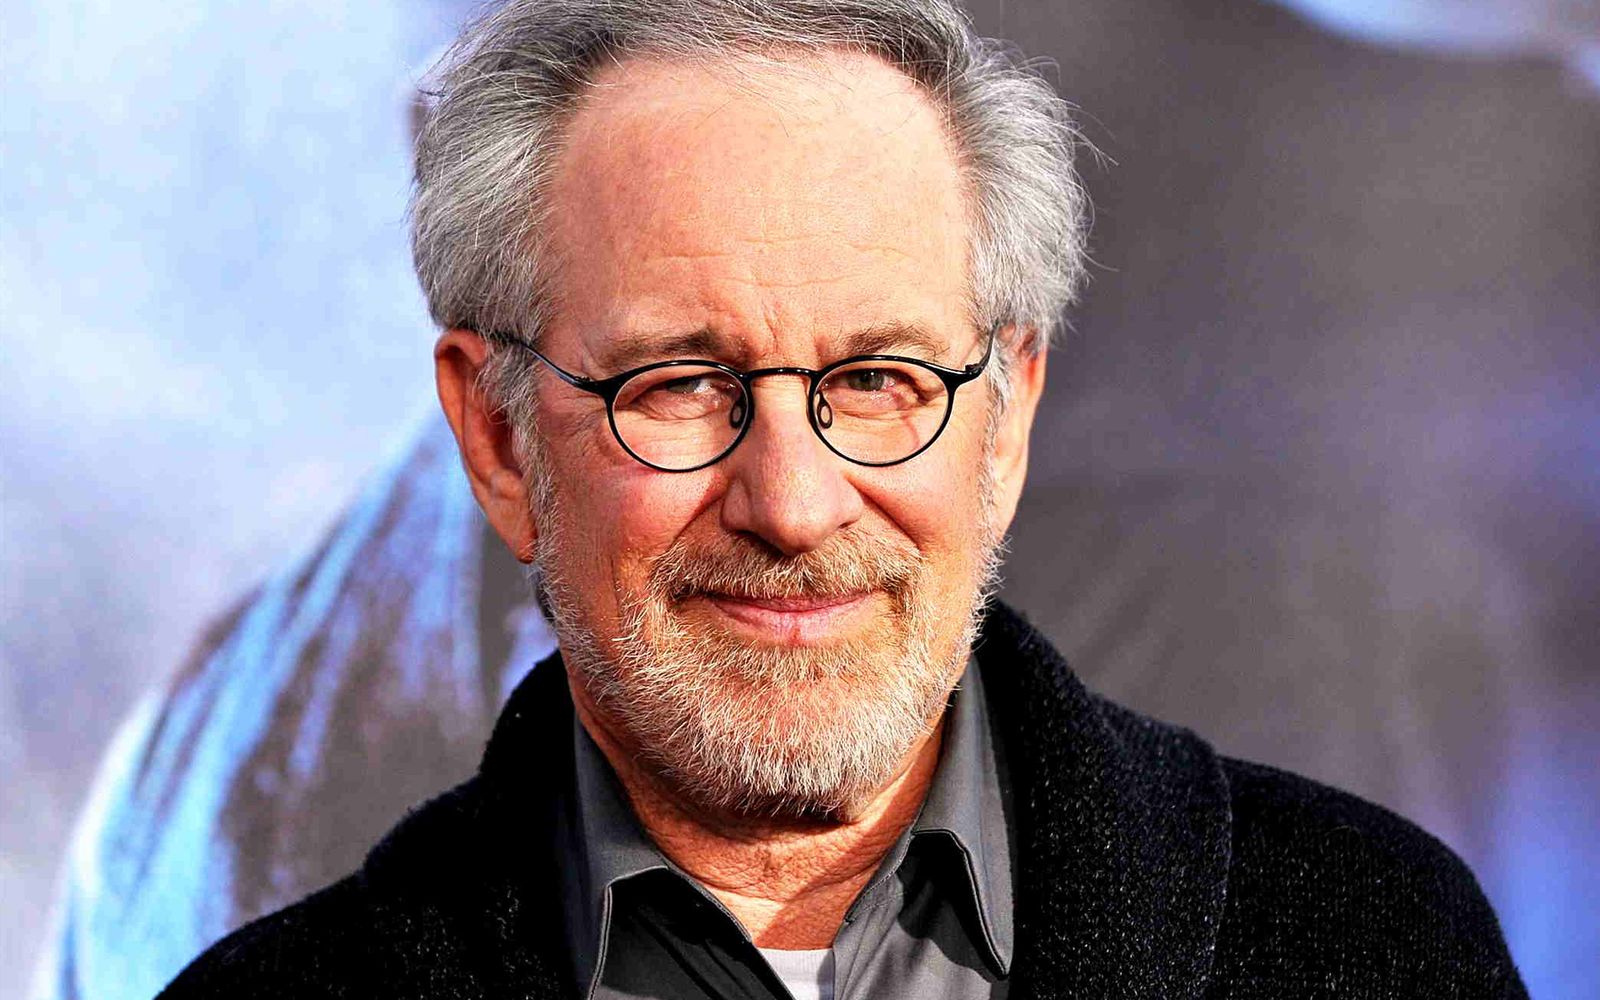 New York Film Festival: Steven Spielberg And Bob Dylan To Be Honoured